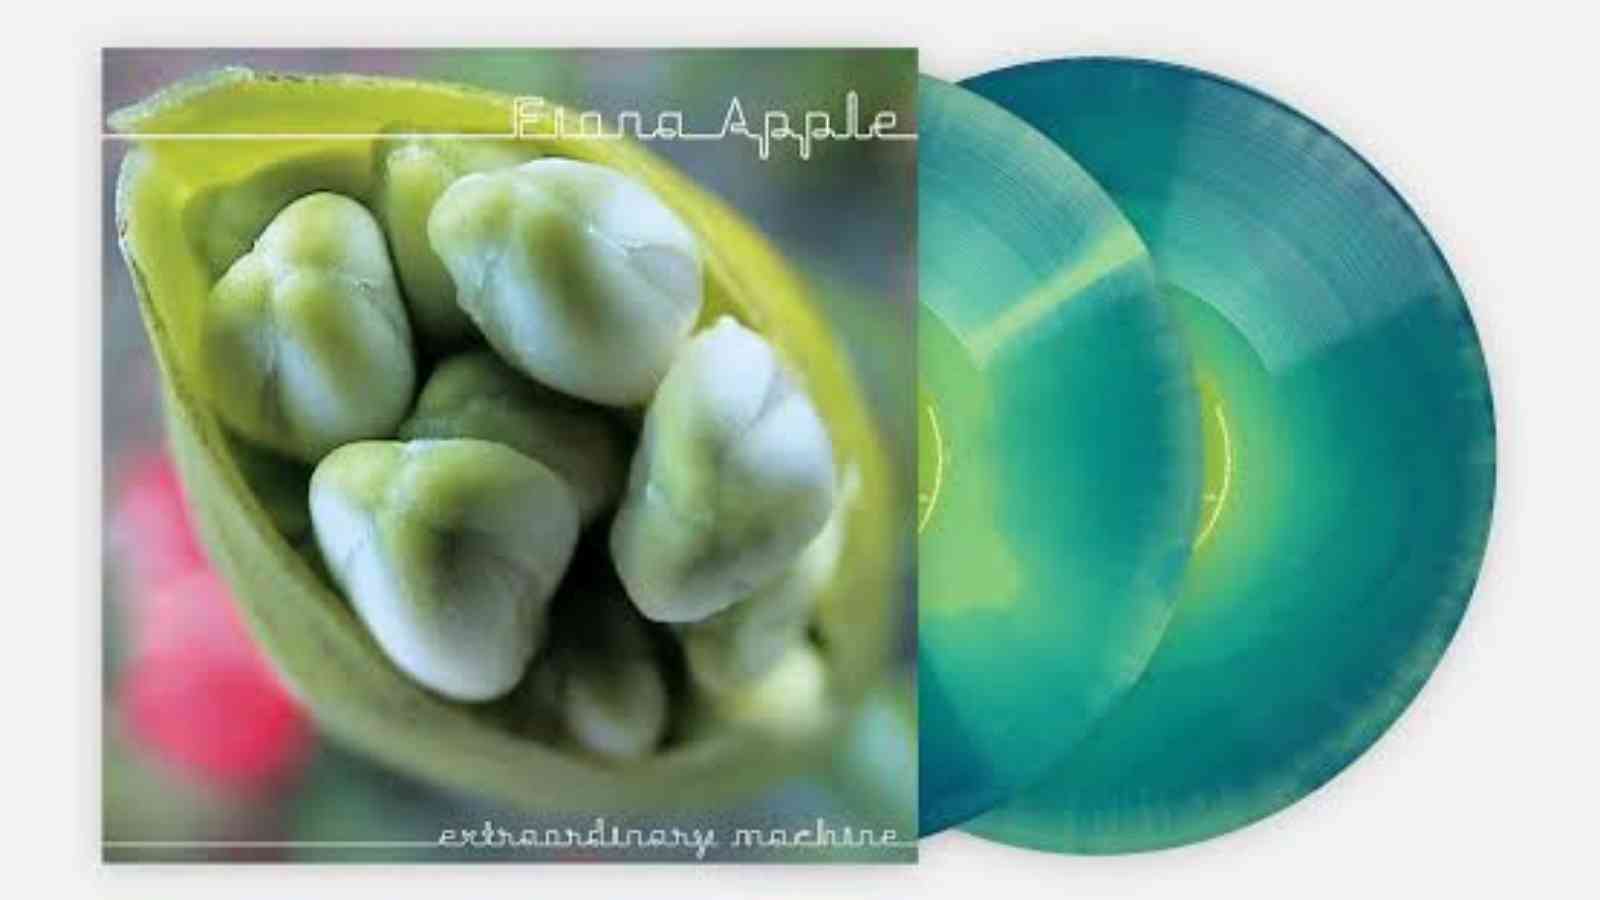 Fionna Apples' Extraordinary Machine'